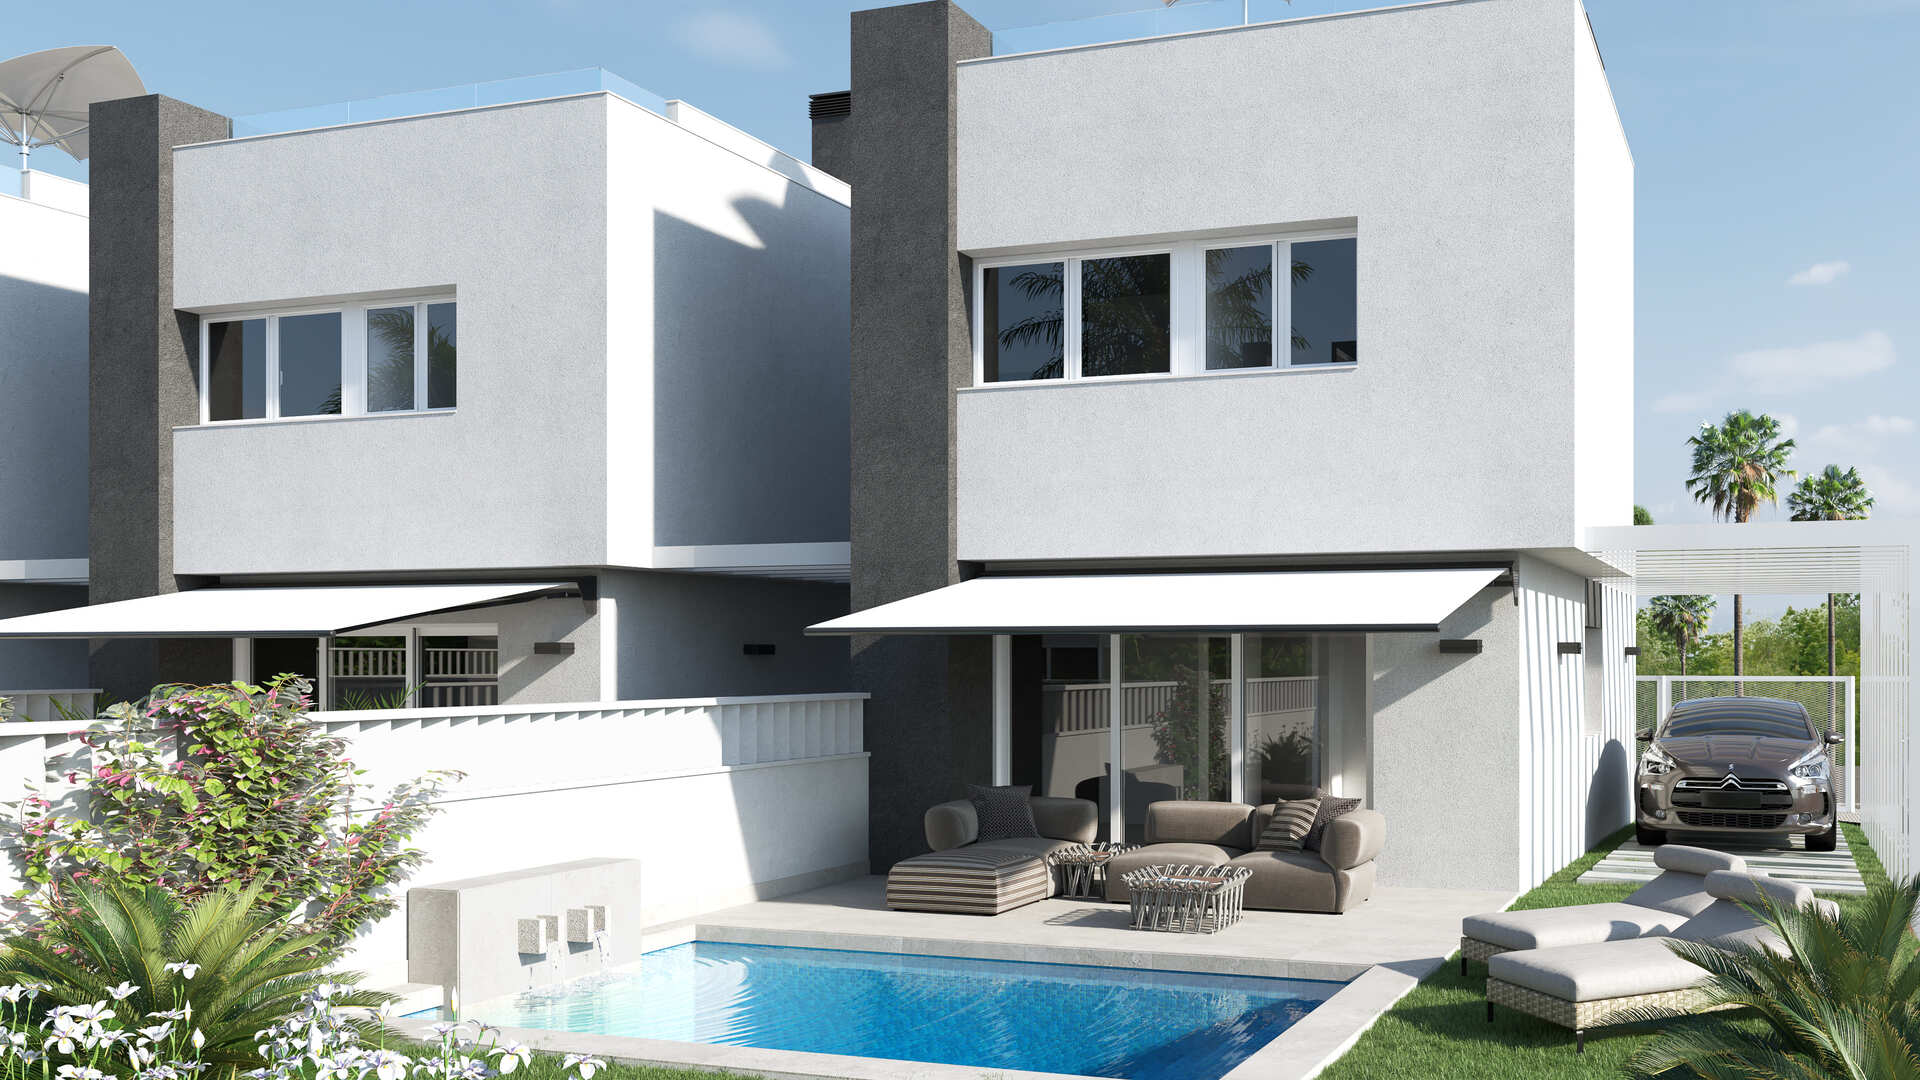 New build semi-detached villas for sale near the beach in Pilar de la Horadada.